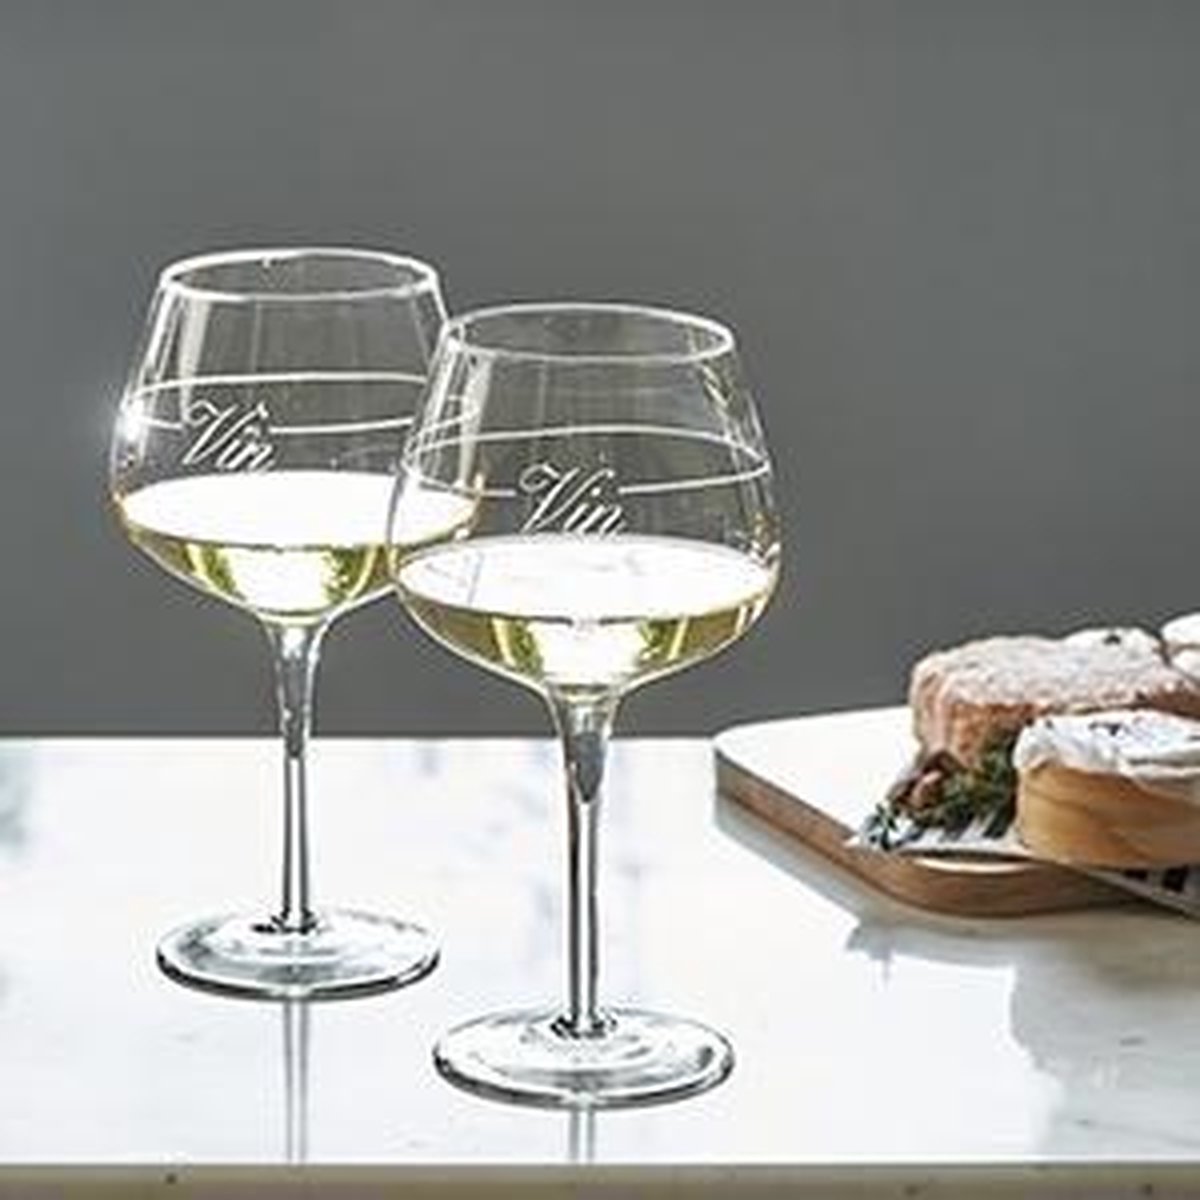 Erfenis Fjord Vlieger Rivièra Maison Vin Wine Glass 2 Stuks | bol.com